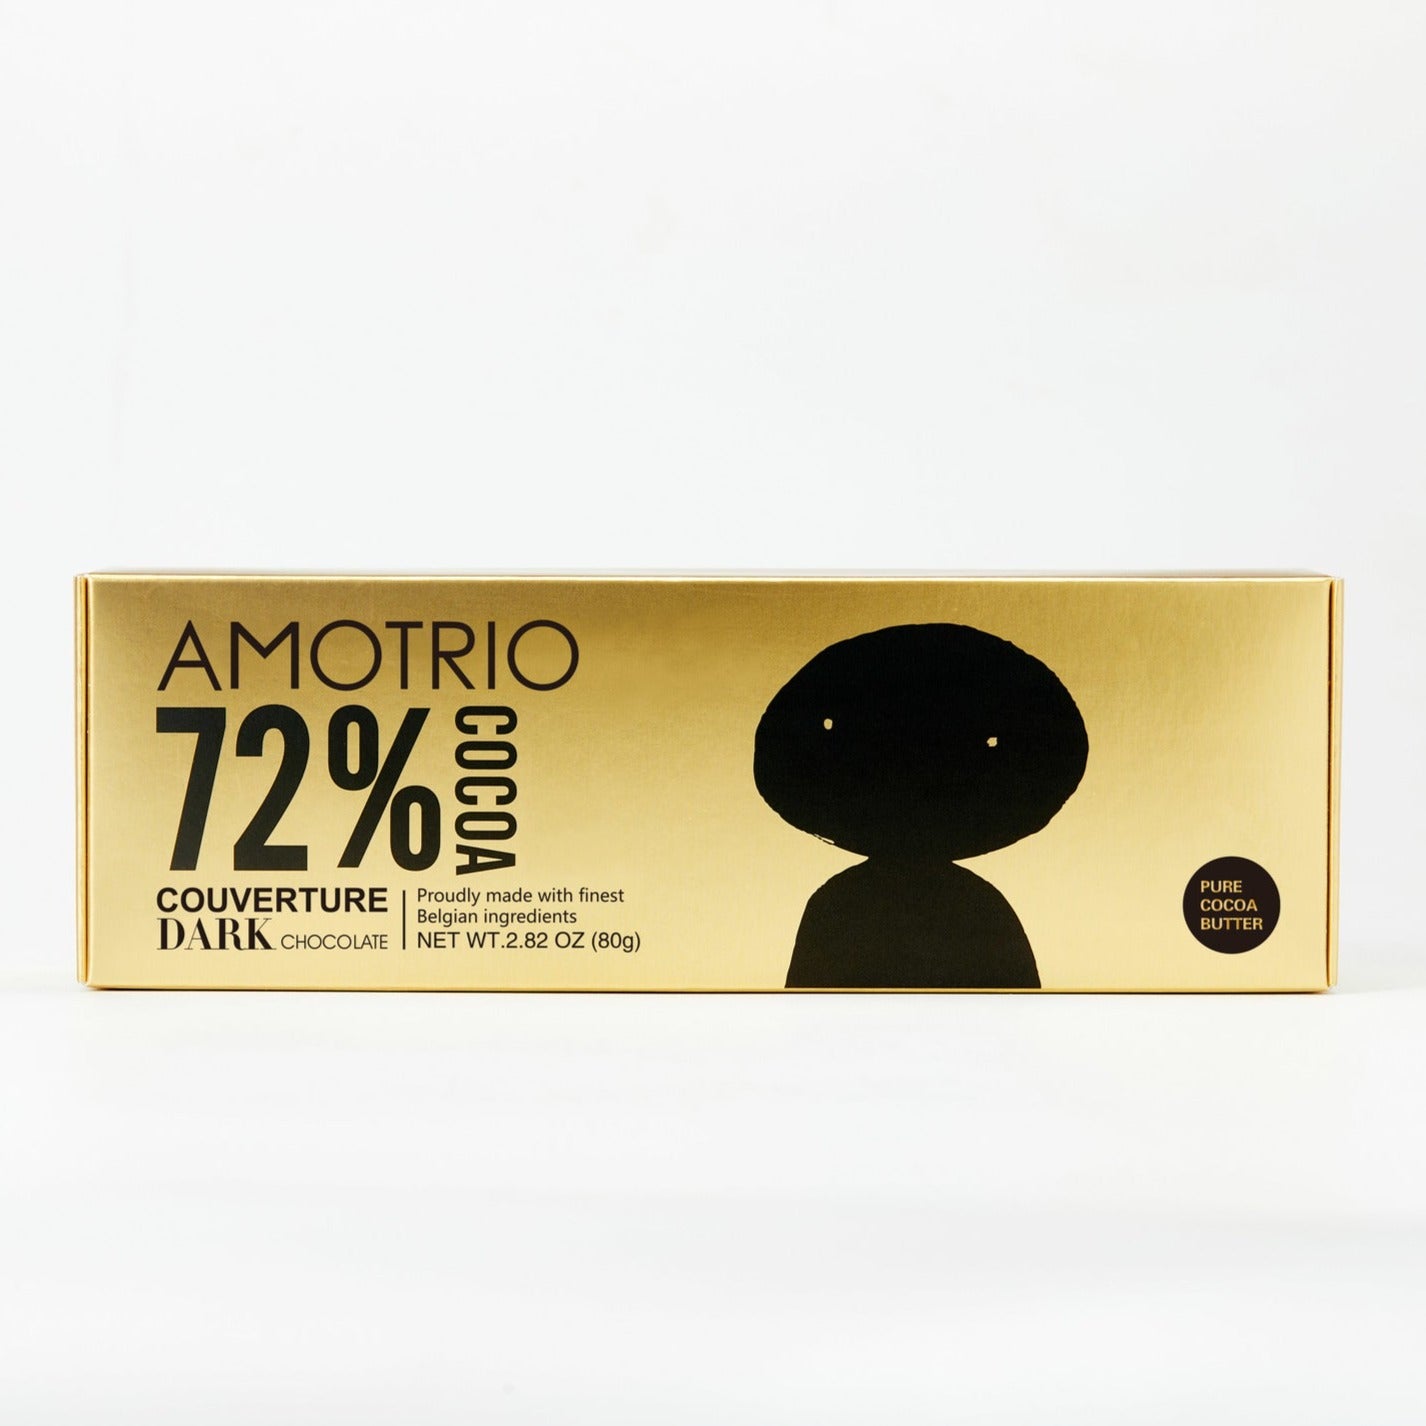 Amotrio Couverture Dark Chocolate 72%